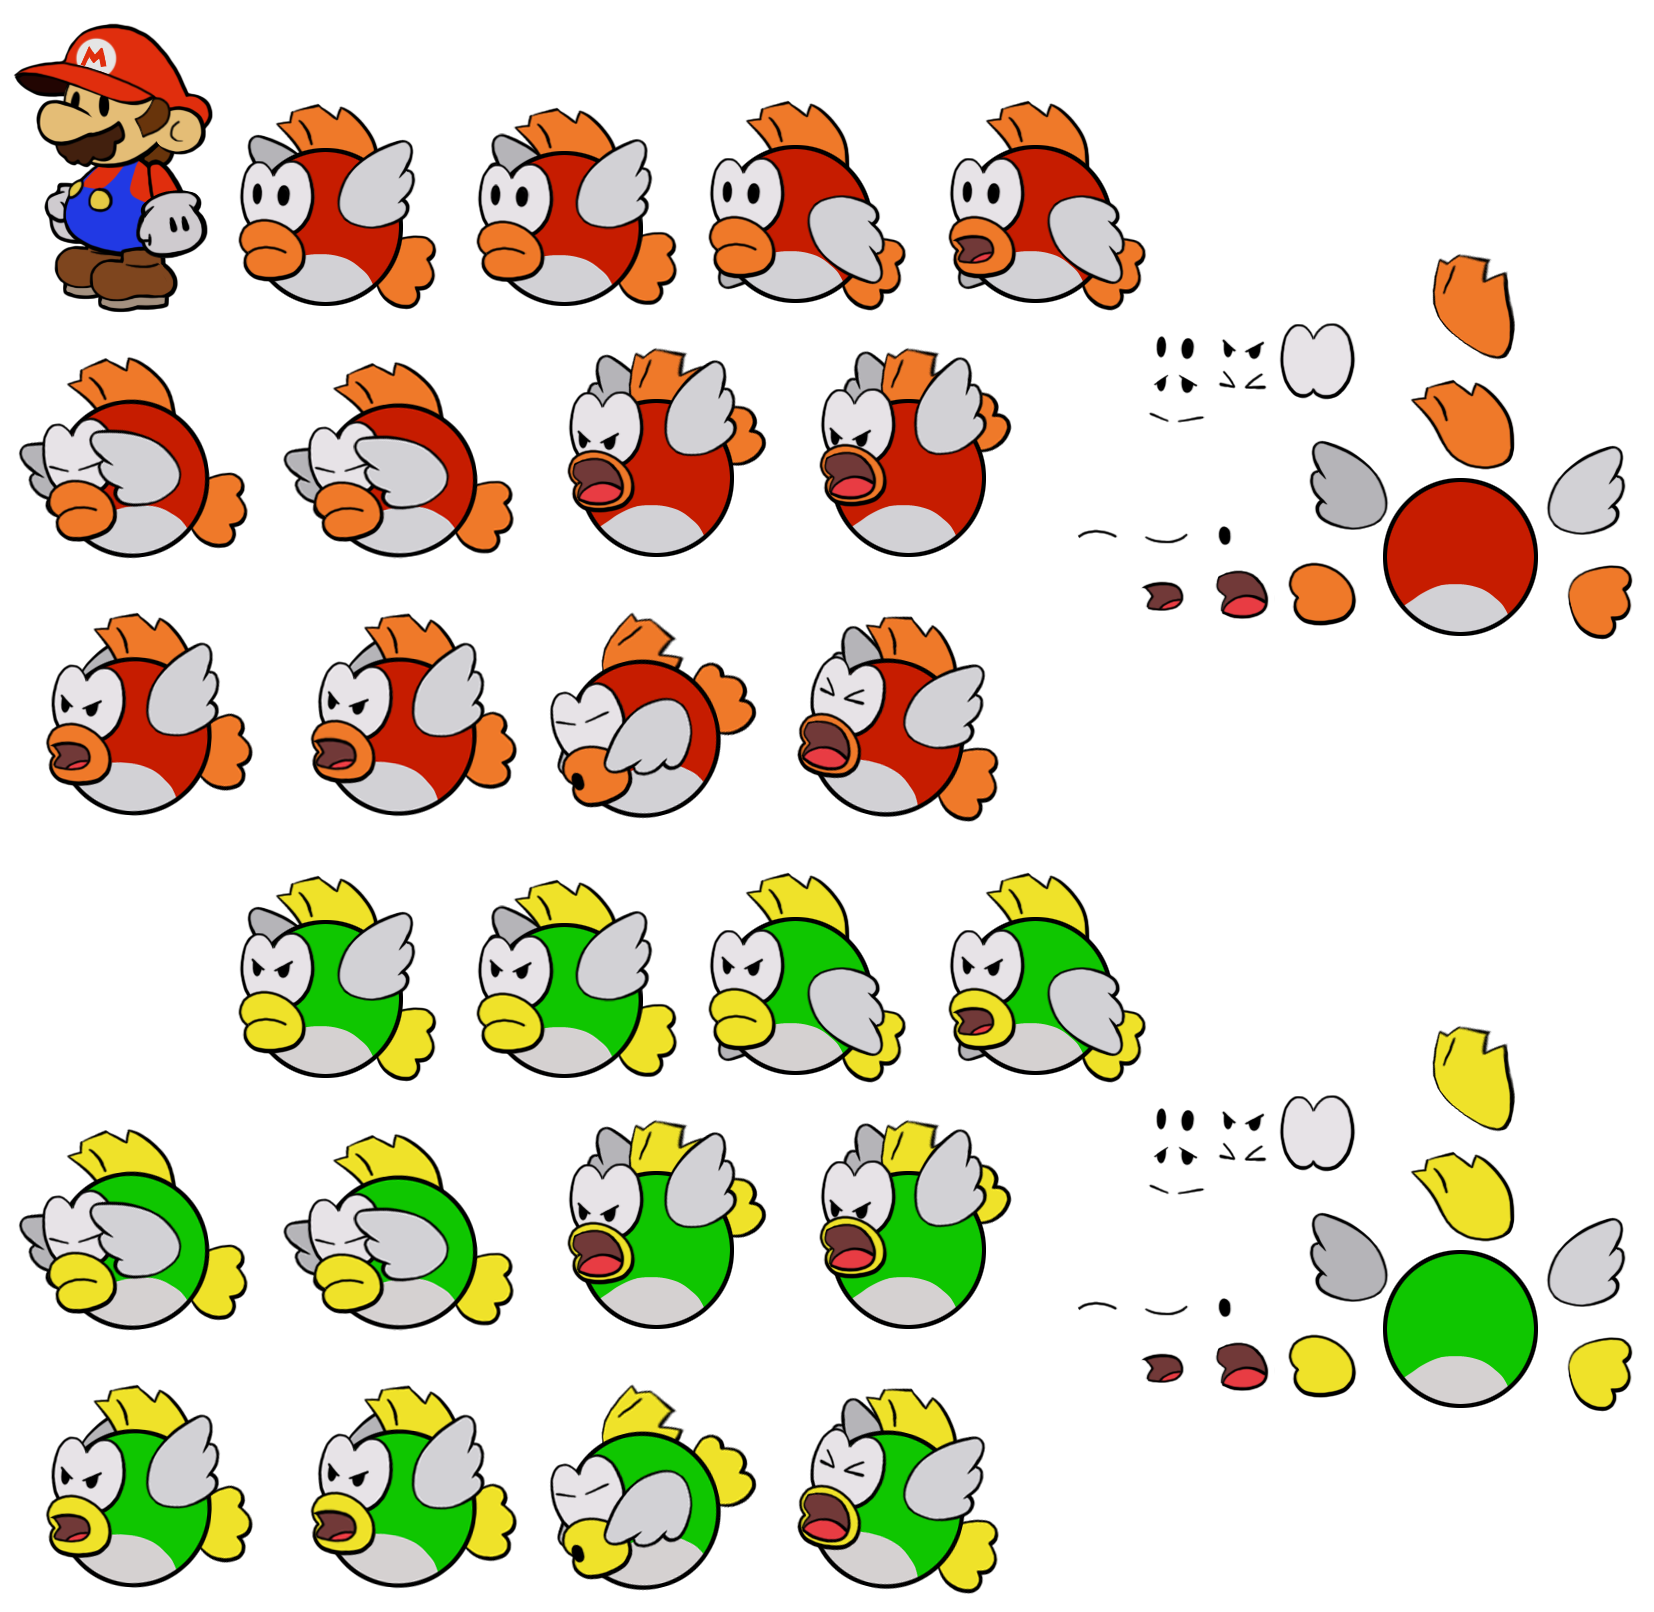 Mario Customs - Cheep Cheeps (Paper Mario-Style)